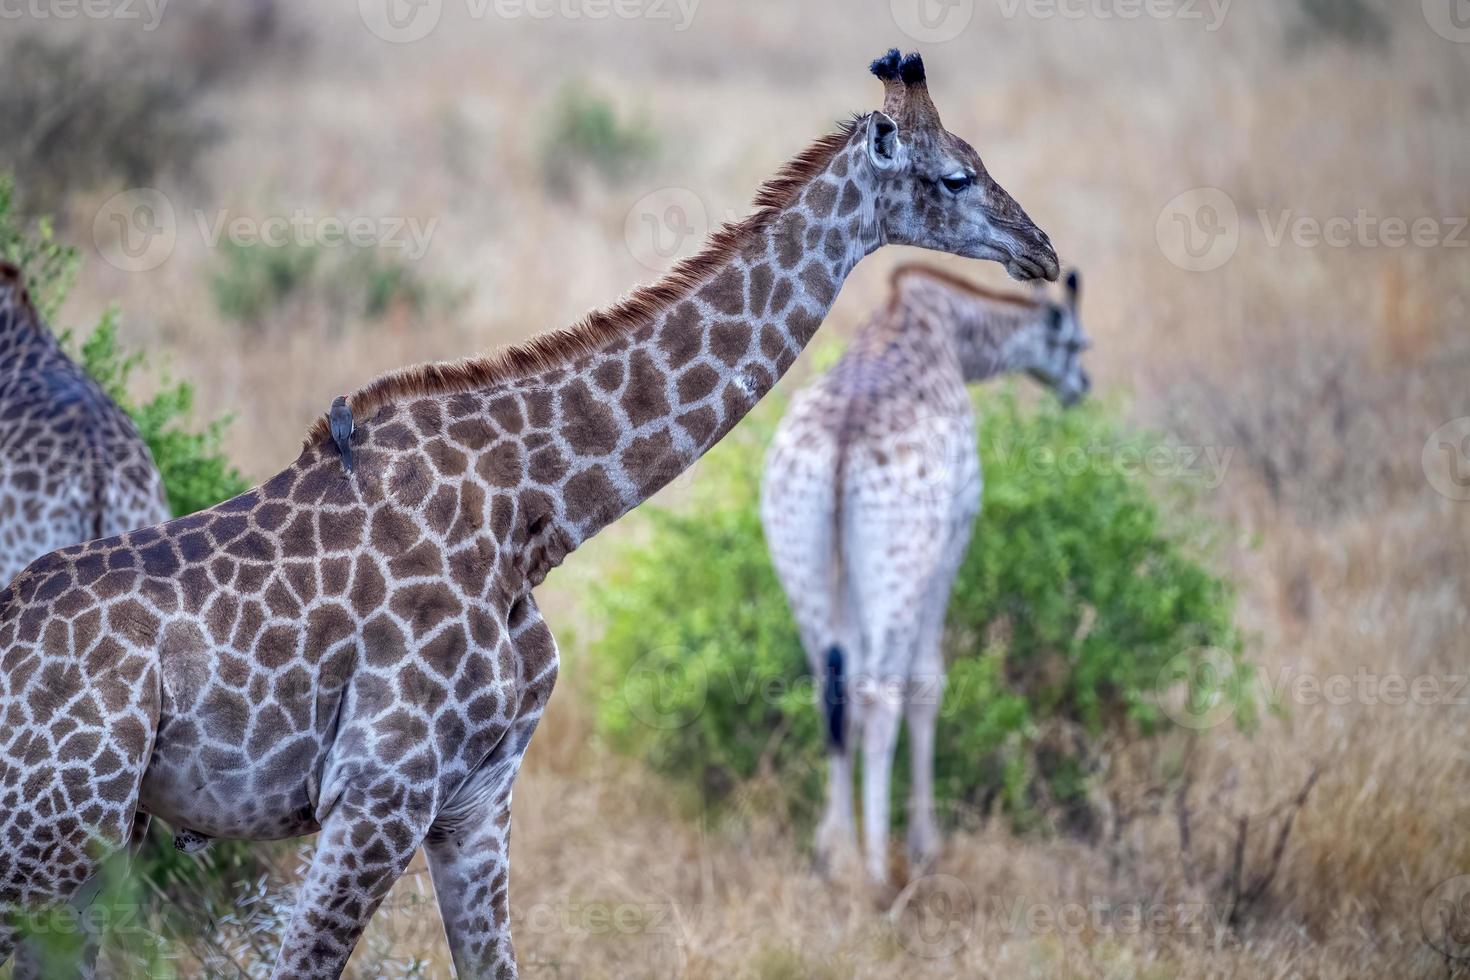 Giraffe in Kruger national park, South Africa Giraffa camelopardalis family of Giraffidae portrait photo